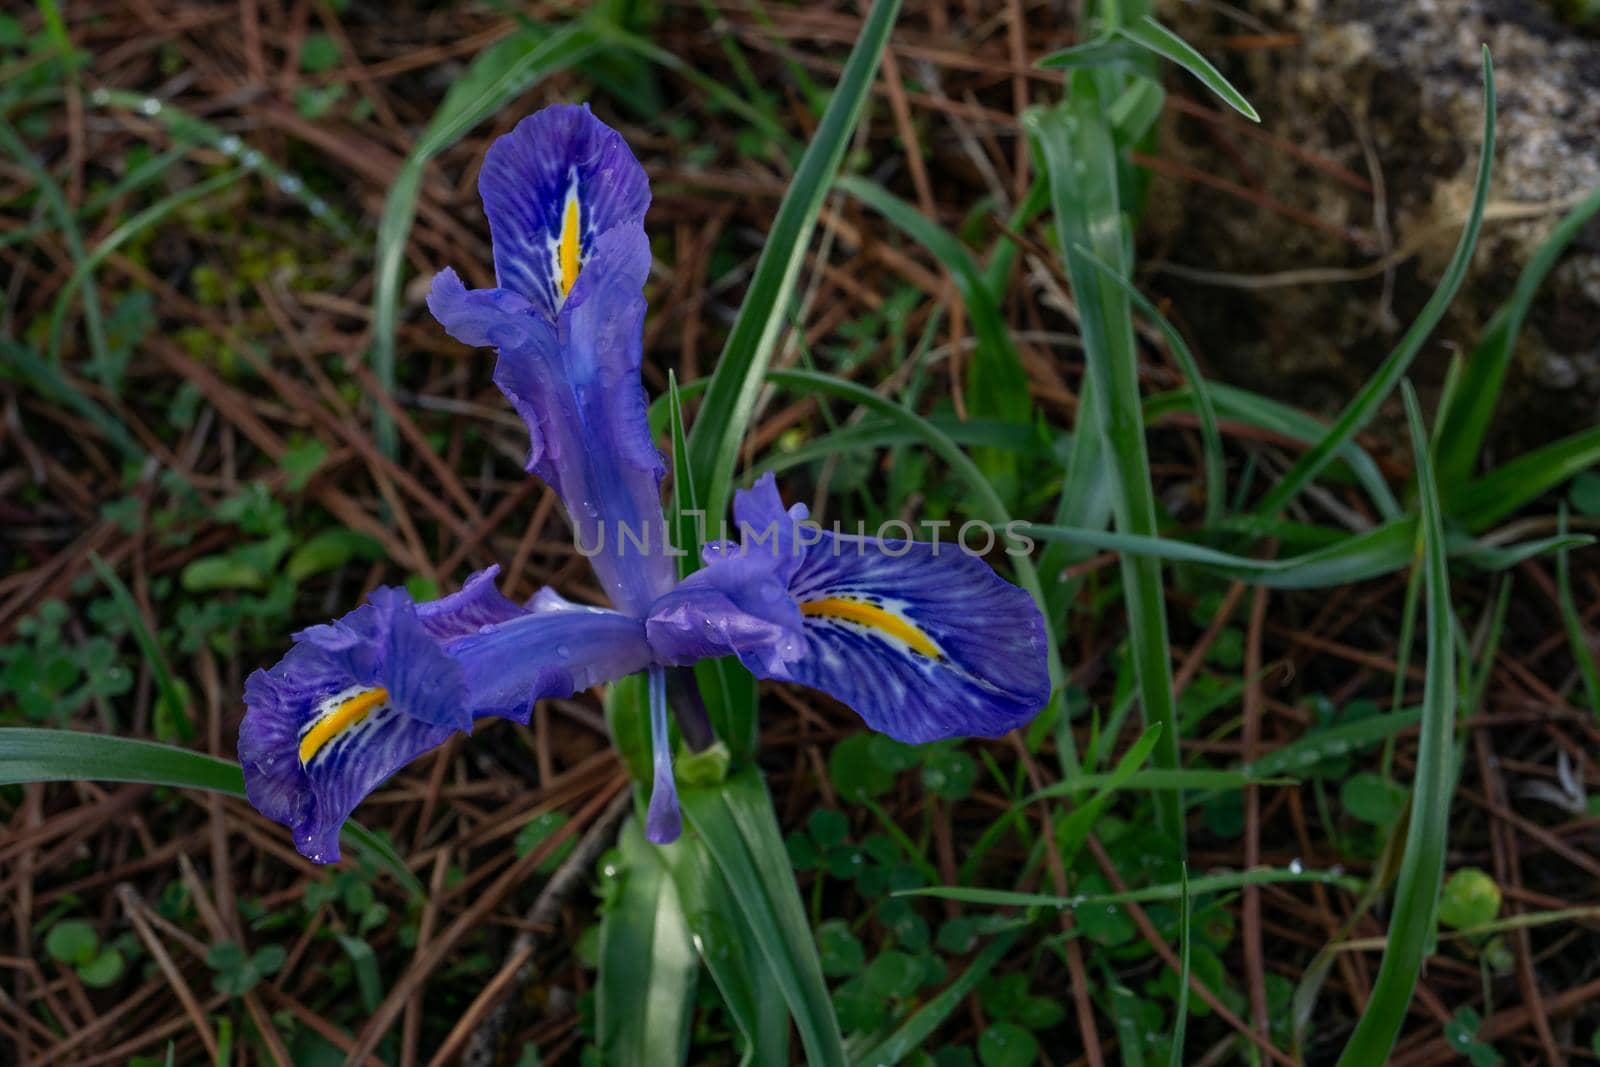 winter lily or "Iris unguicularis" wild plant of coniferous forests by joseantona